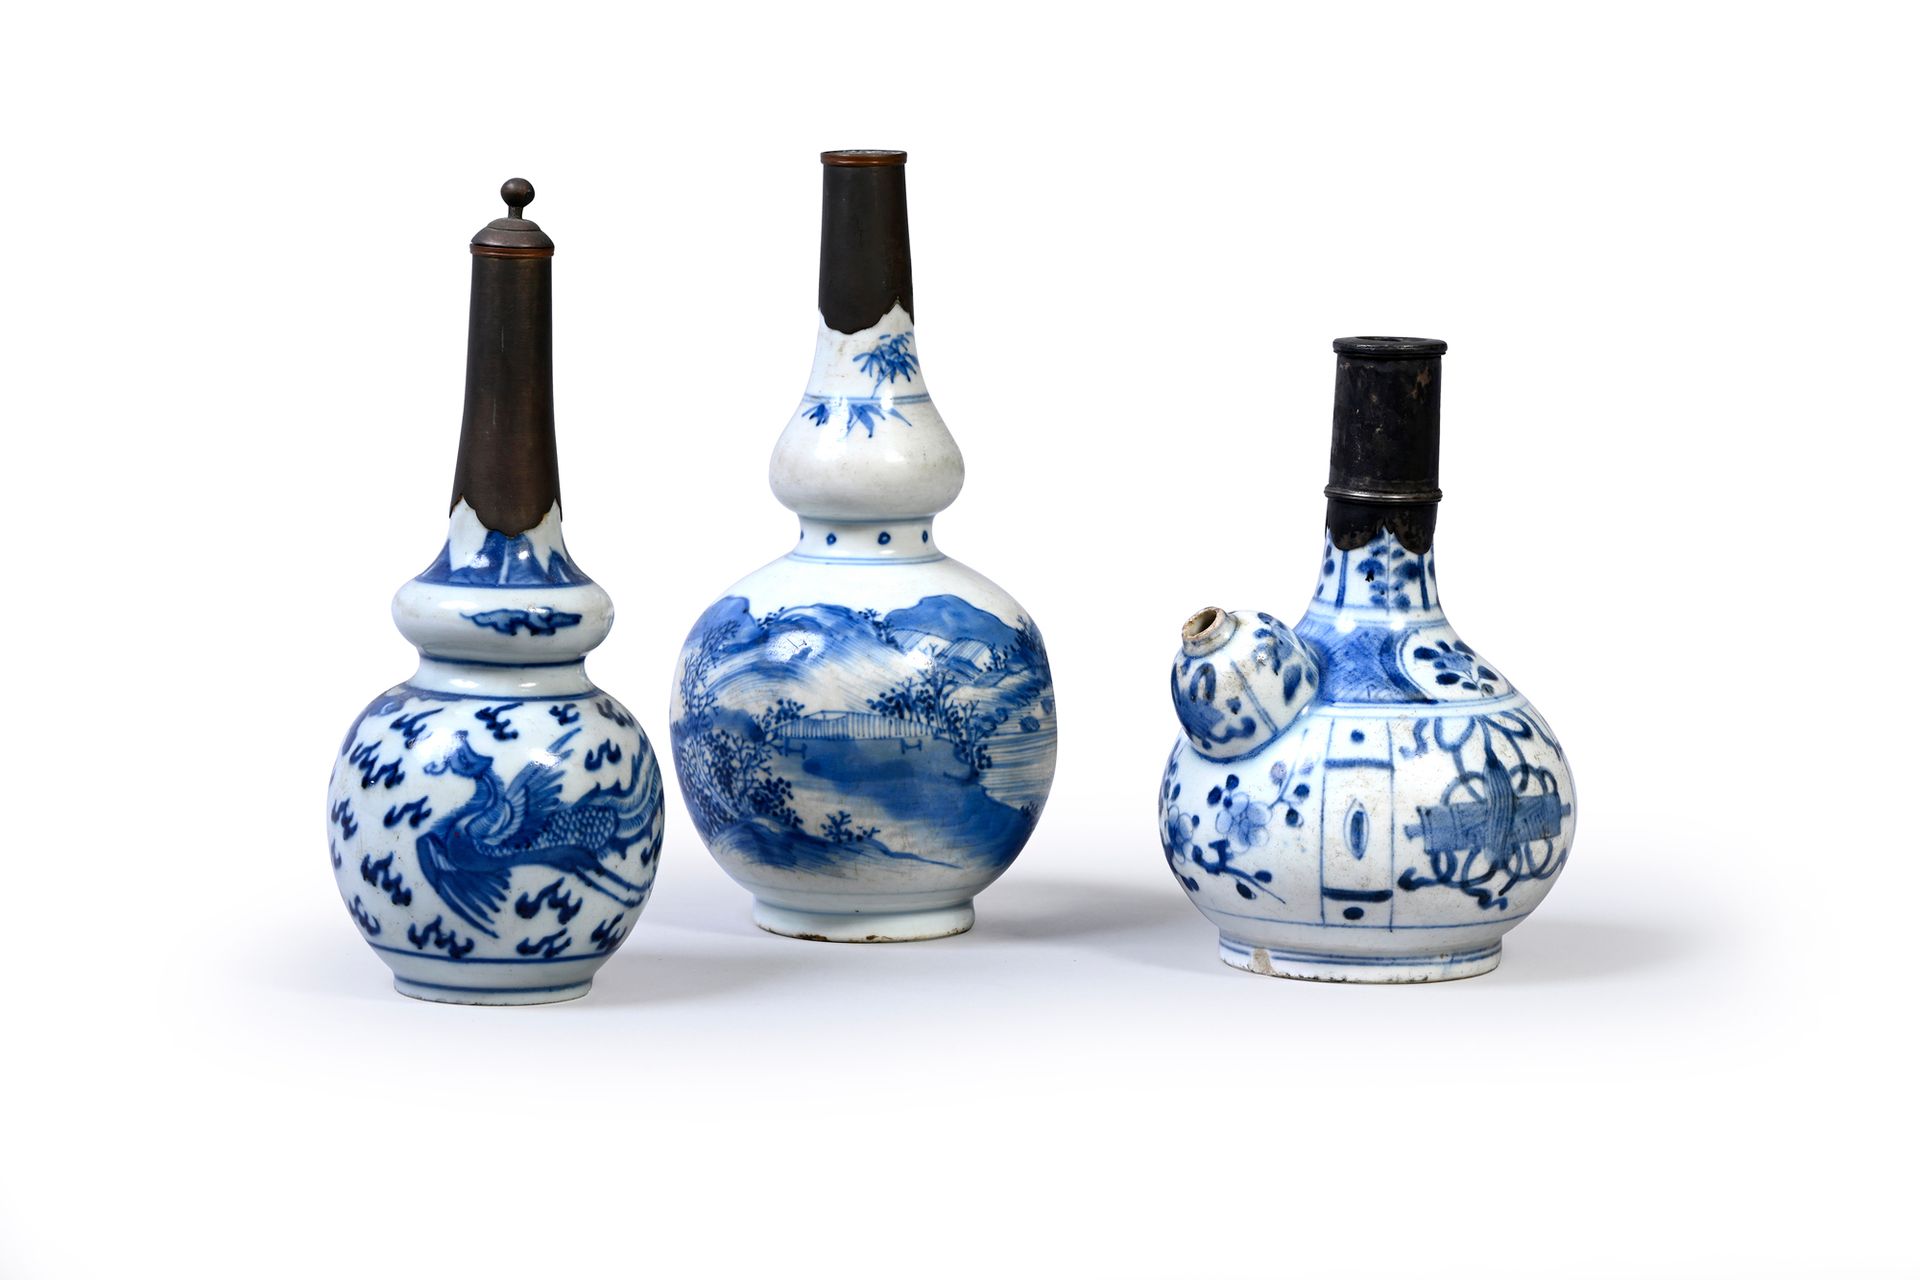 CHINE, Dynastie Ming, Époque Wanli 瓷器肯迪
带有青花装饰的花瓶，颈部有金属安装。
附有两个双葫芦形式的瓷瓶。
H.16,5和&hellip;